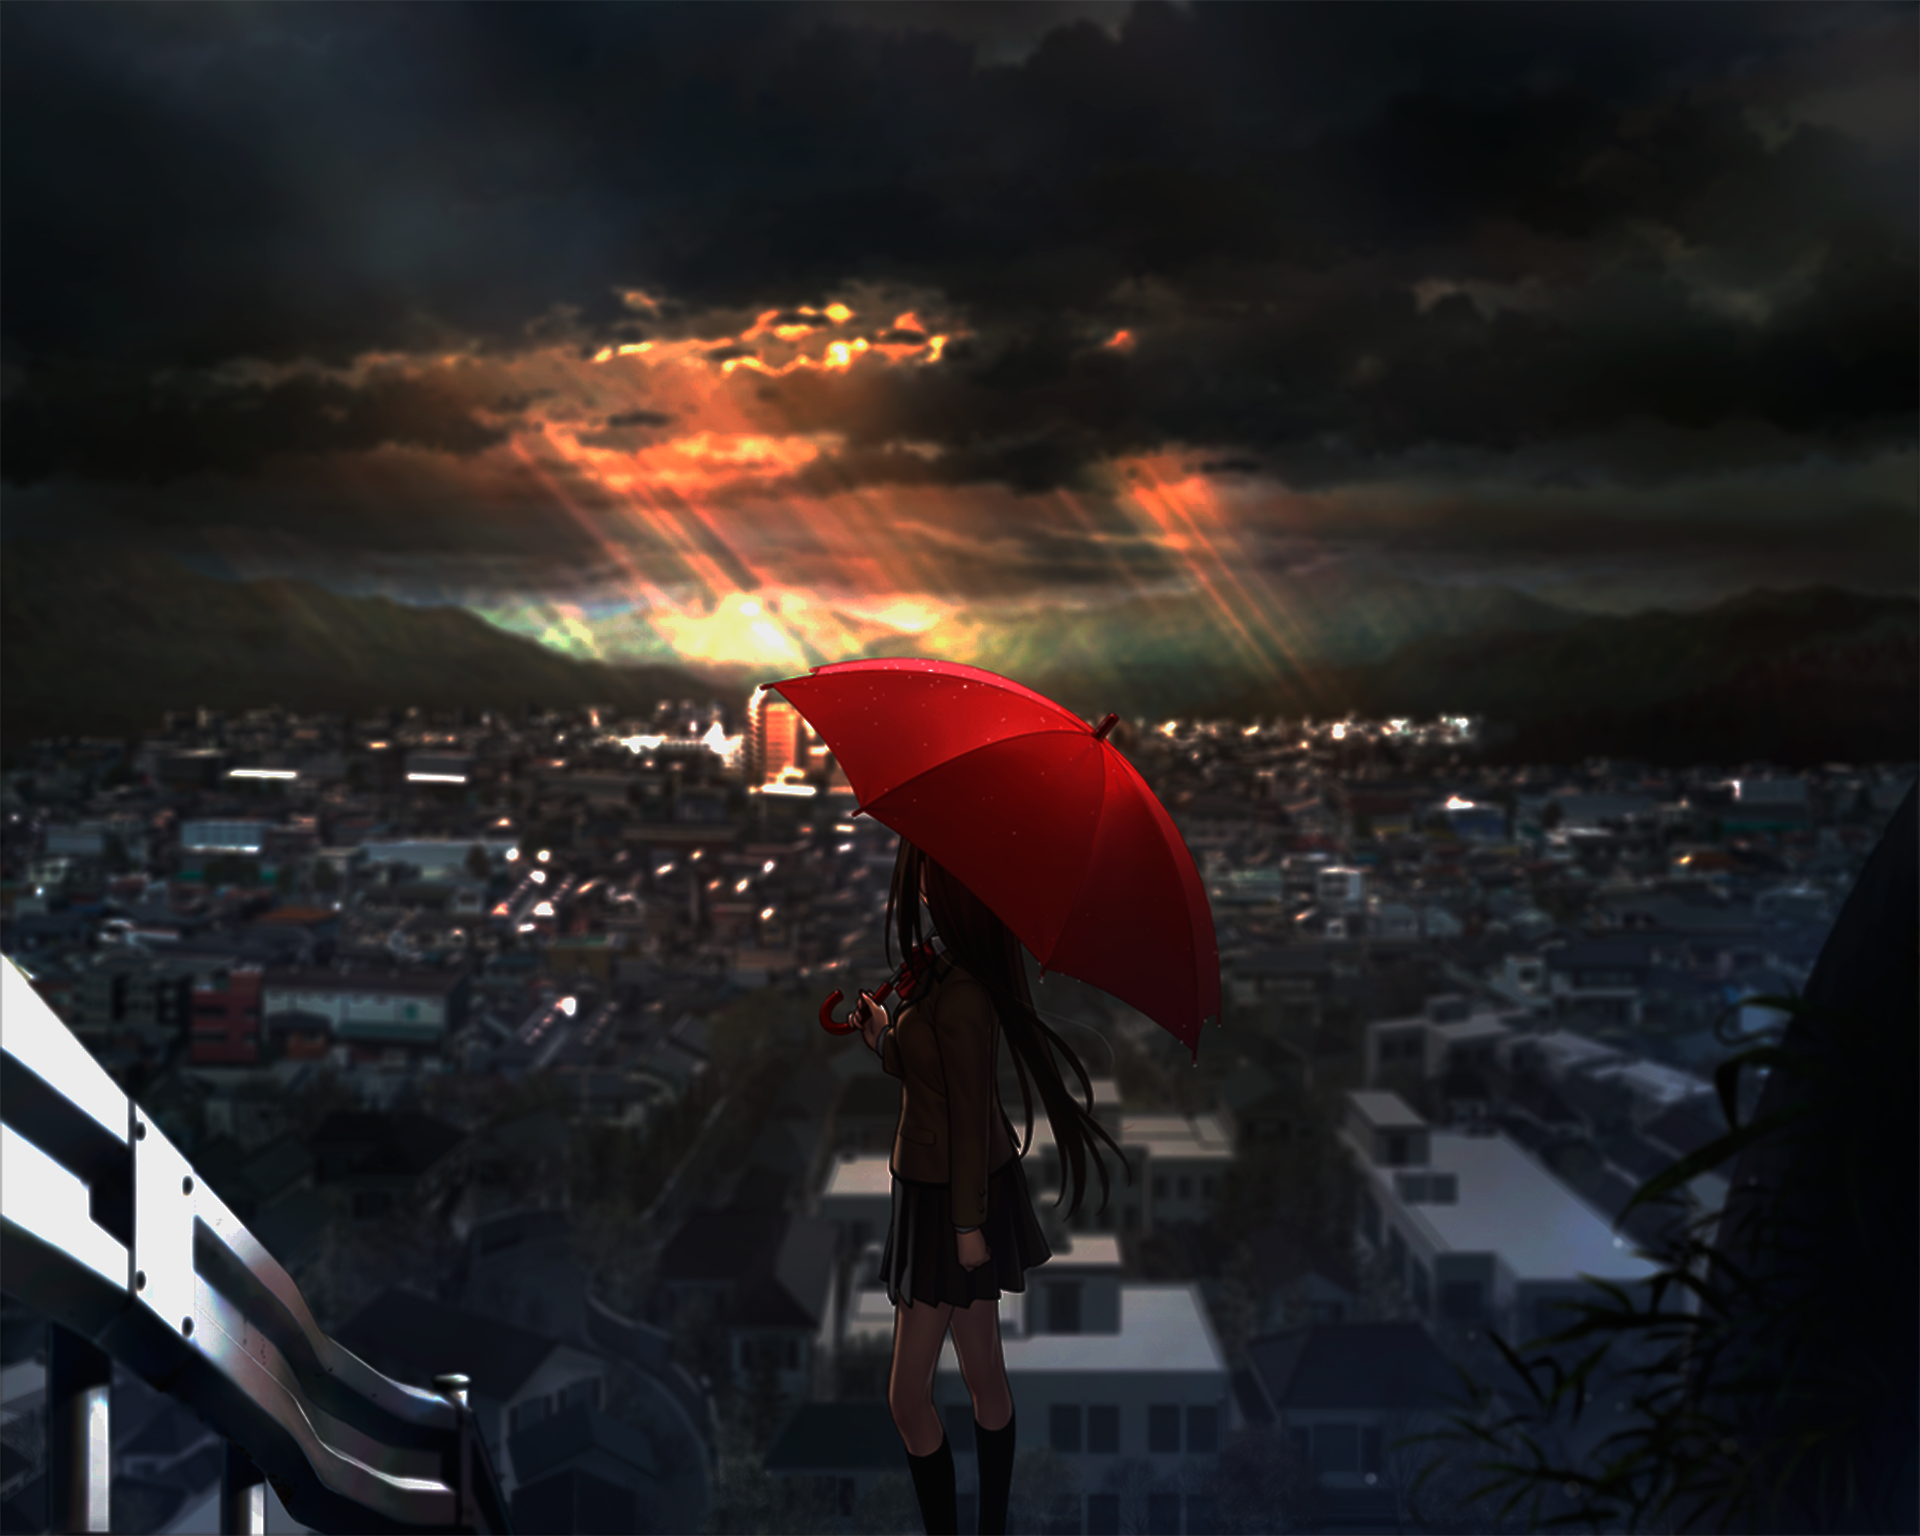 Anime 1920x1536 anime girls anime Mahoutsukai no Yoru Aozaki Aoko umbrella dark sky sunlight women outdoors urban women with umbrella clouds cityscape